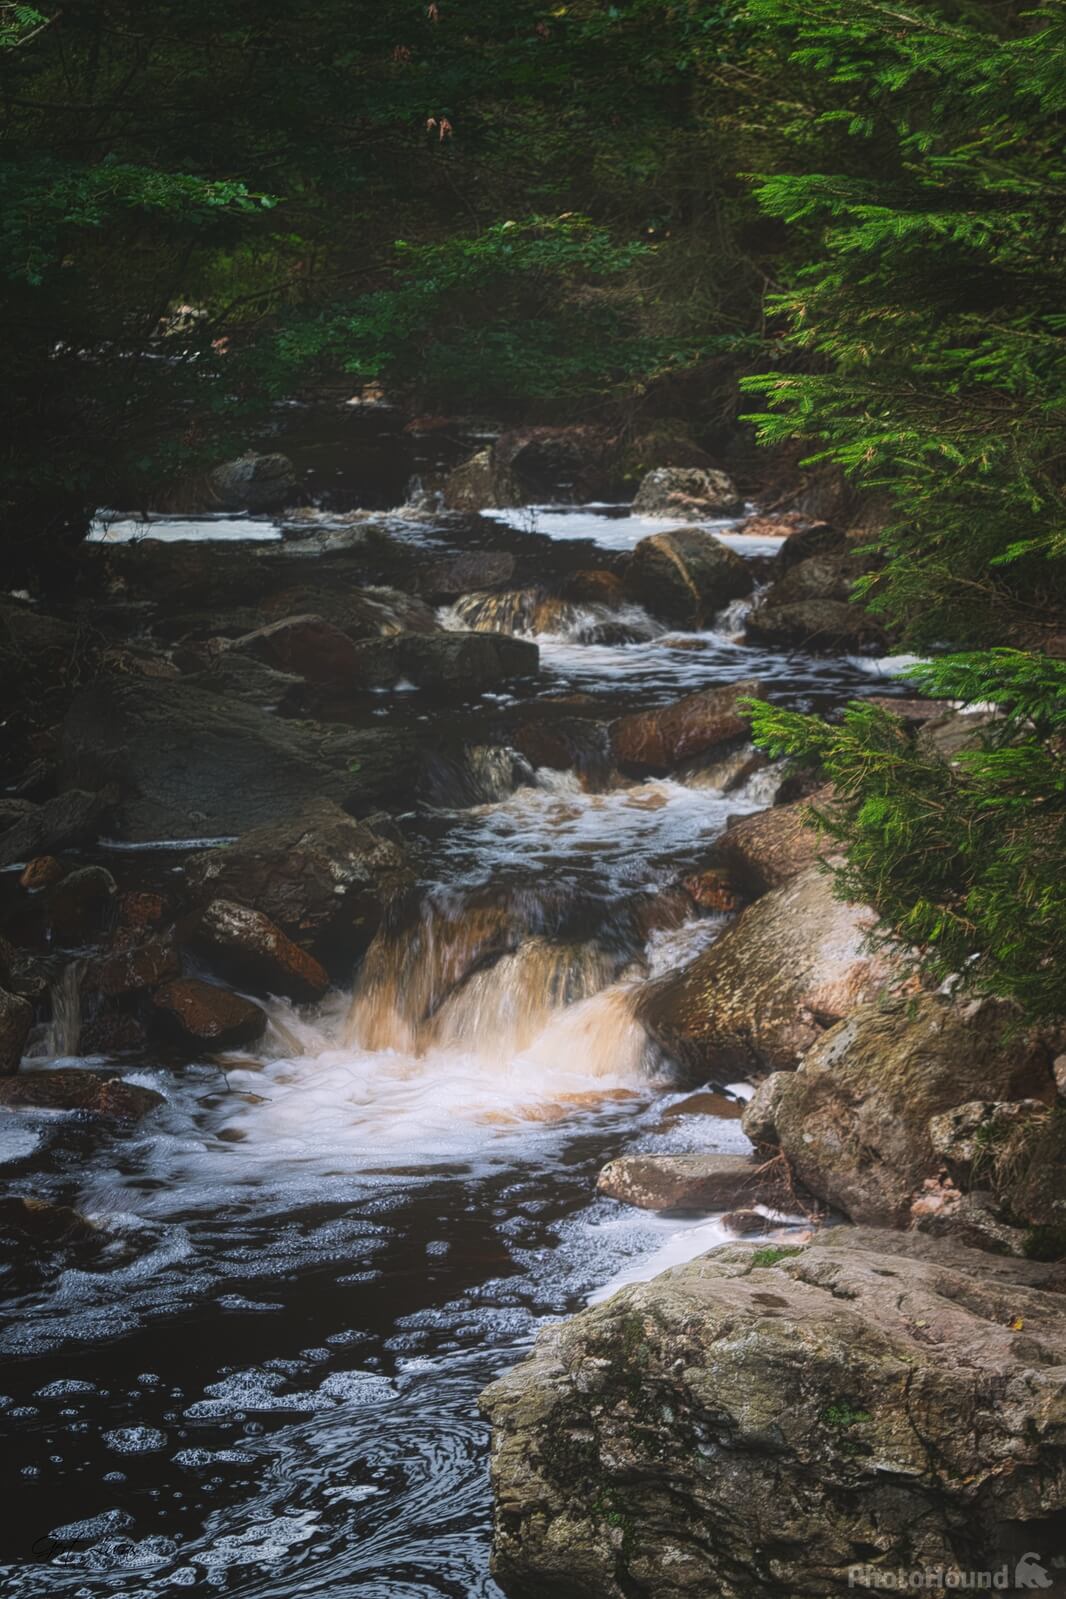 Image of Bayehon Waterfall by Gert Lucas